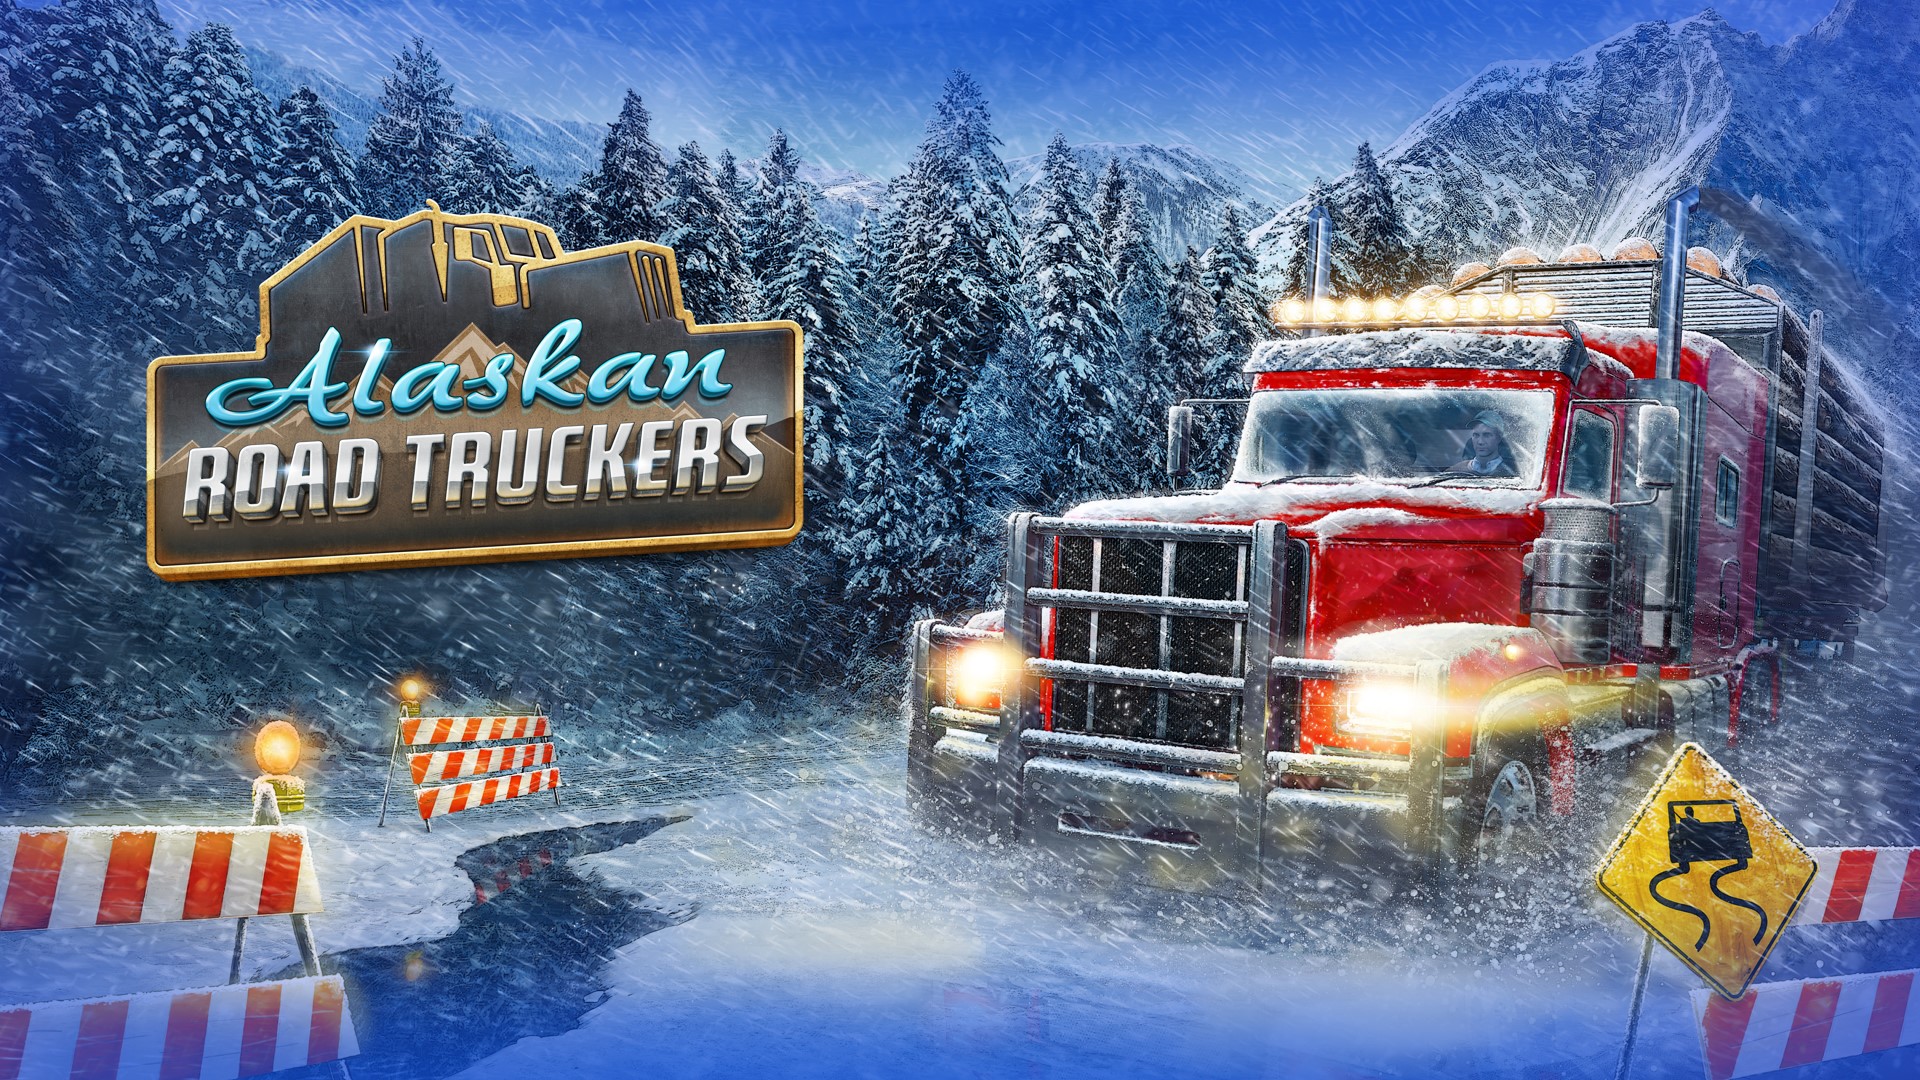 Alaskan Road Truckers: Neuer Trailer zum Truckerleben im hohen Norden